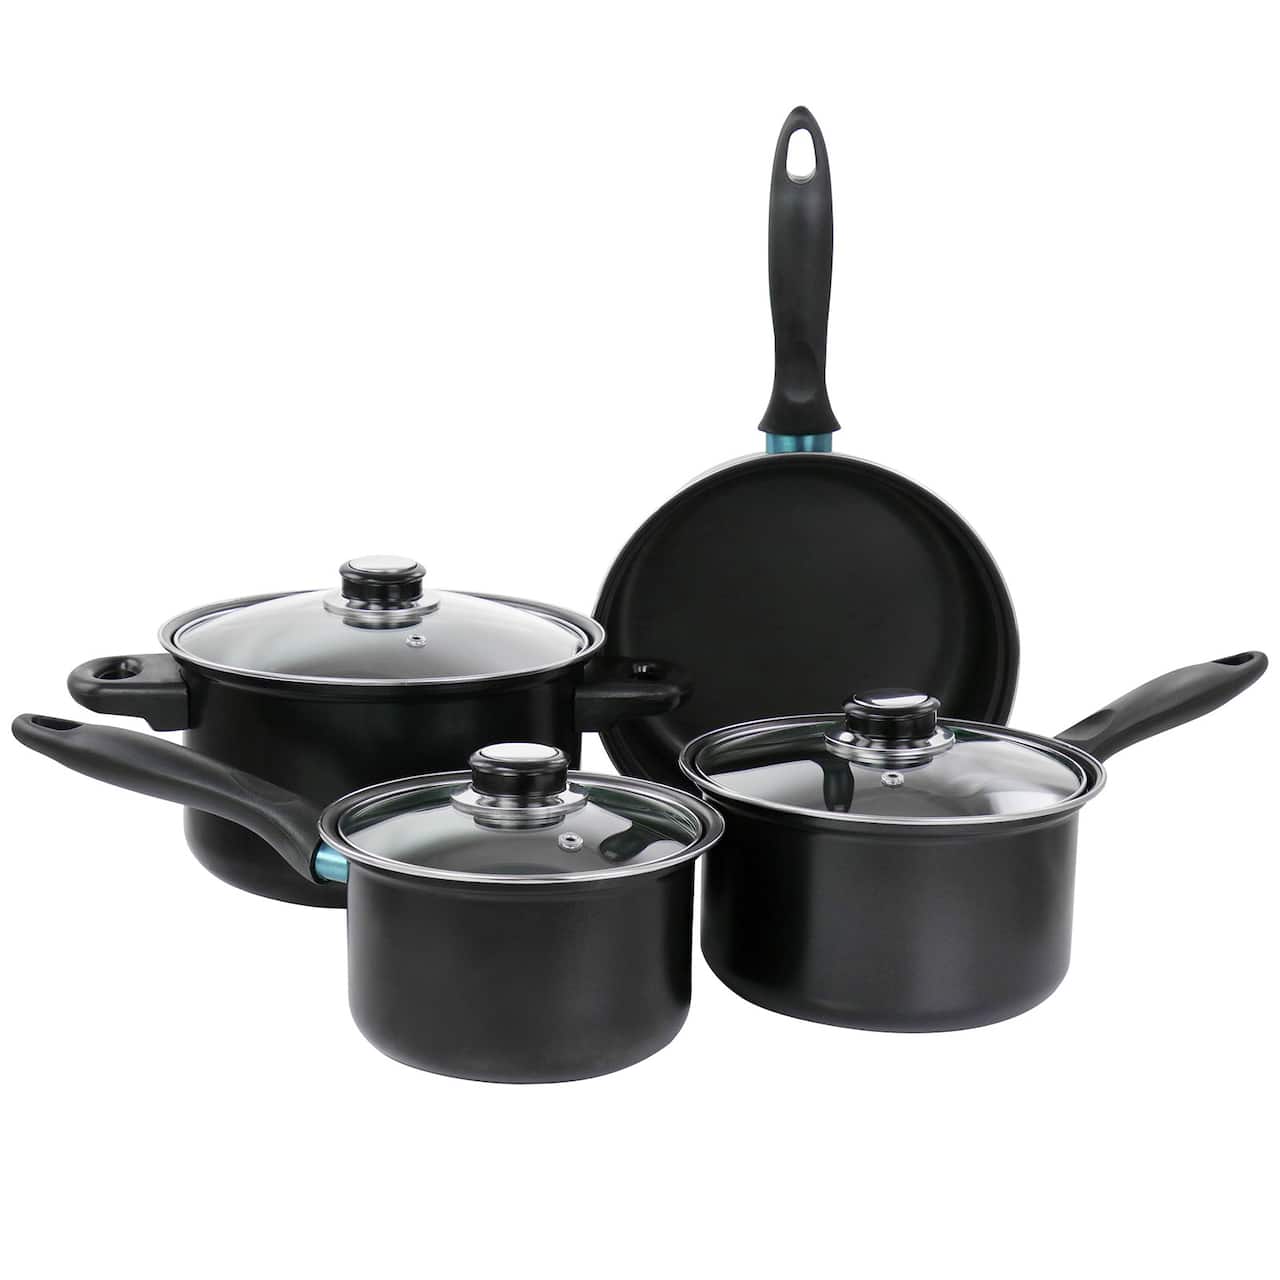 Gibson Home® Newton 7-Piece Black Carbon Steel Cookware Set